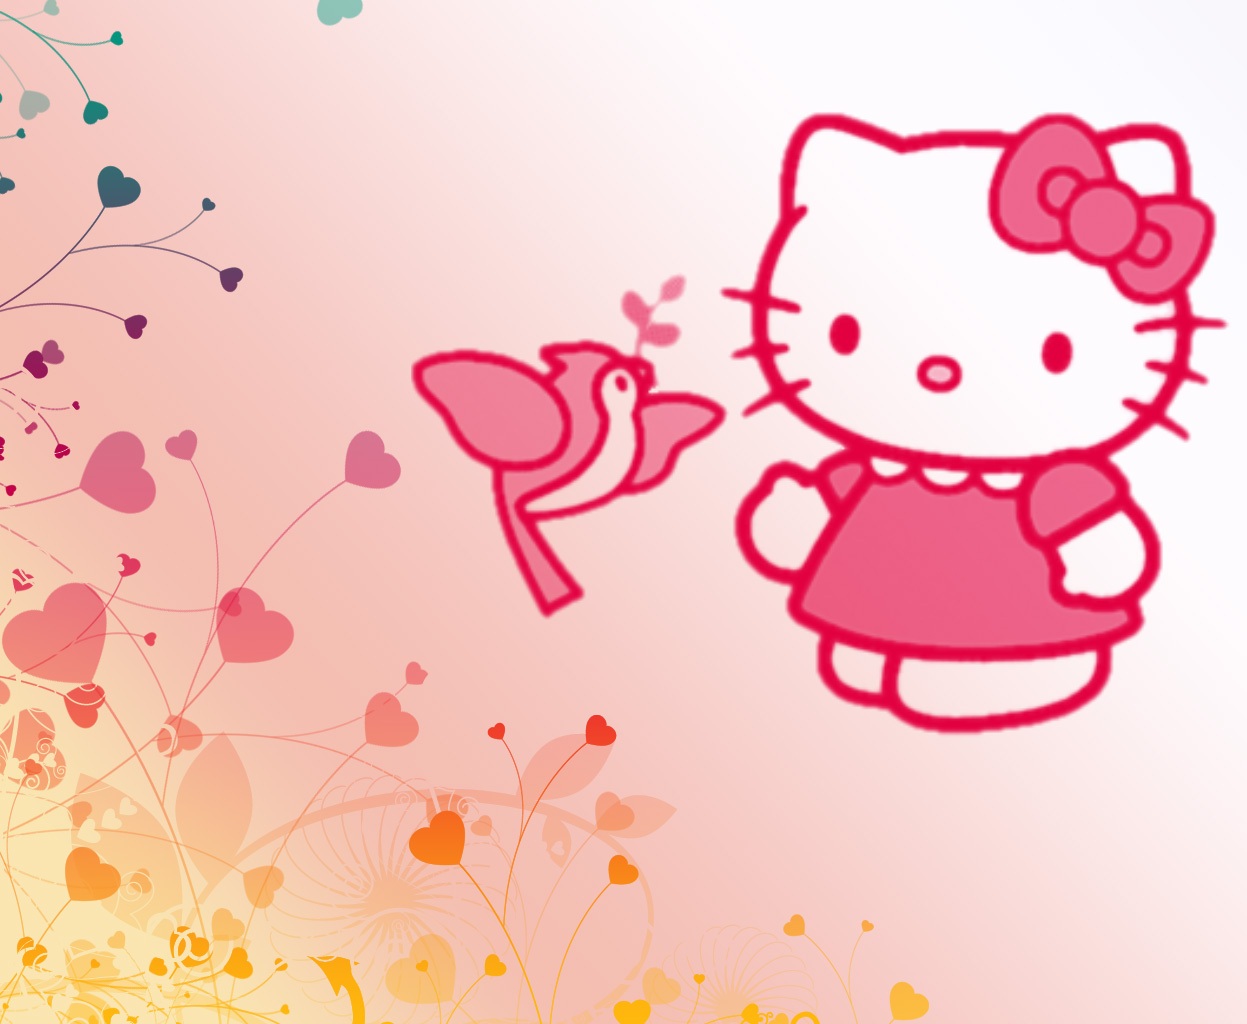 Koleksi Dp Bbm Lucu Bergerak Hello Kitty Kocak Dan Gokil Puzzle